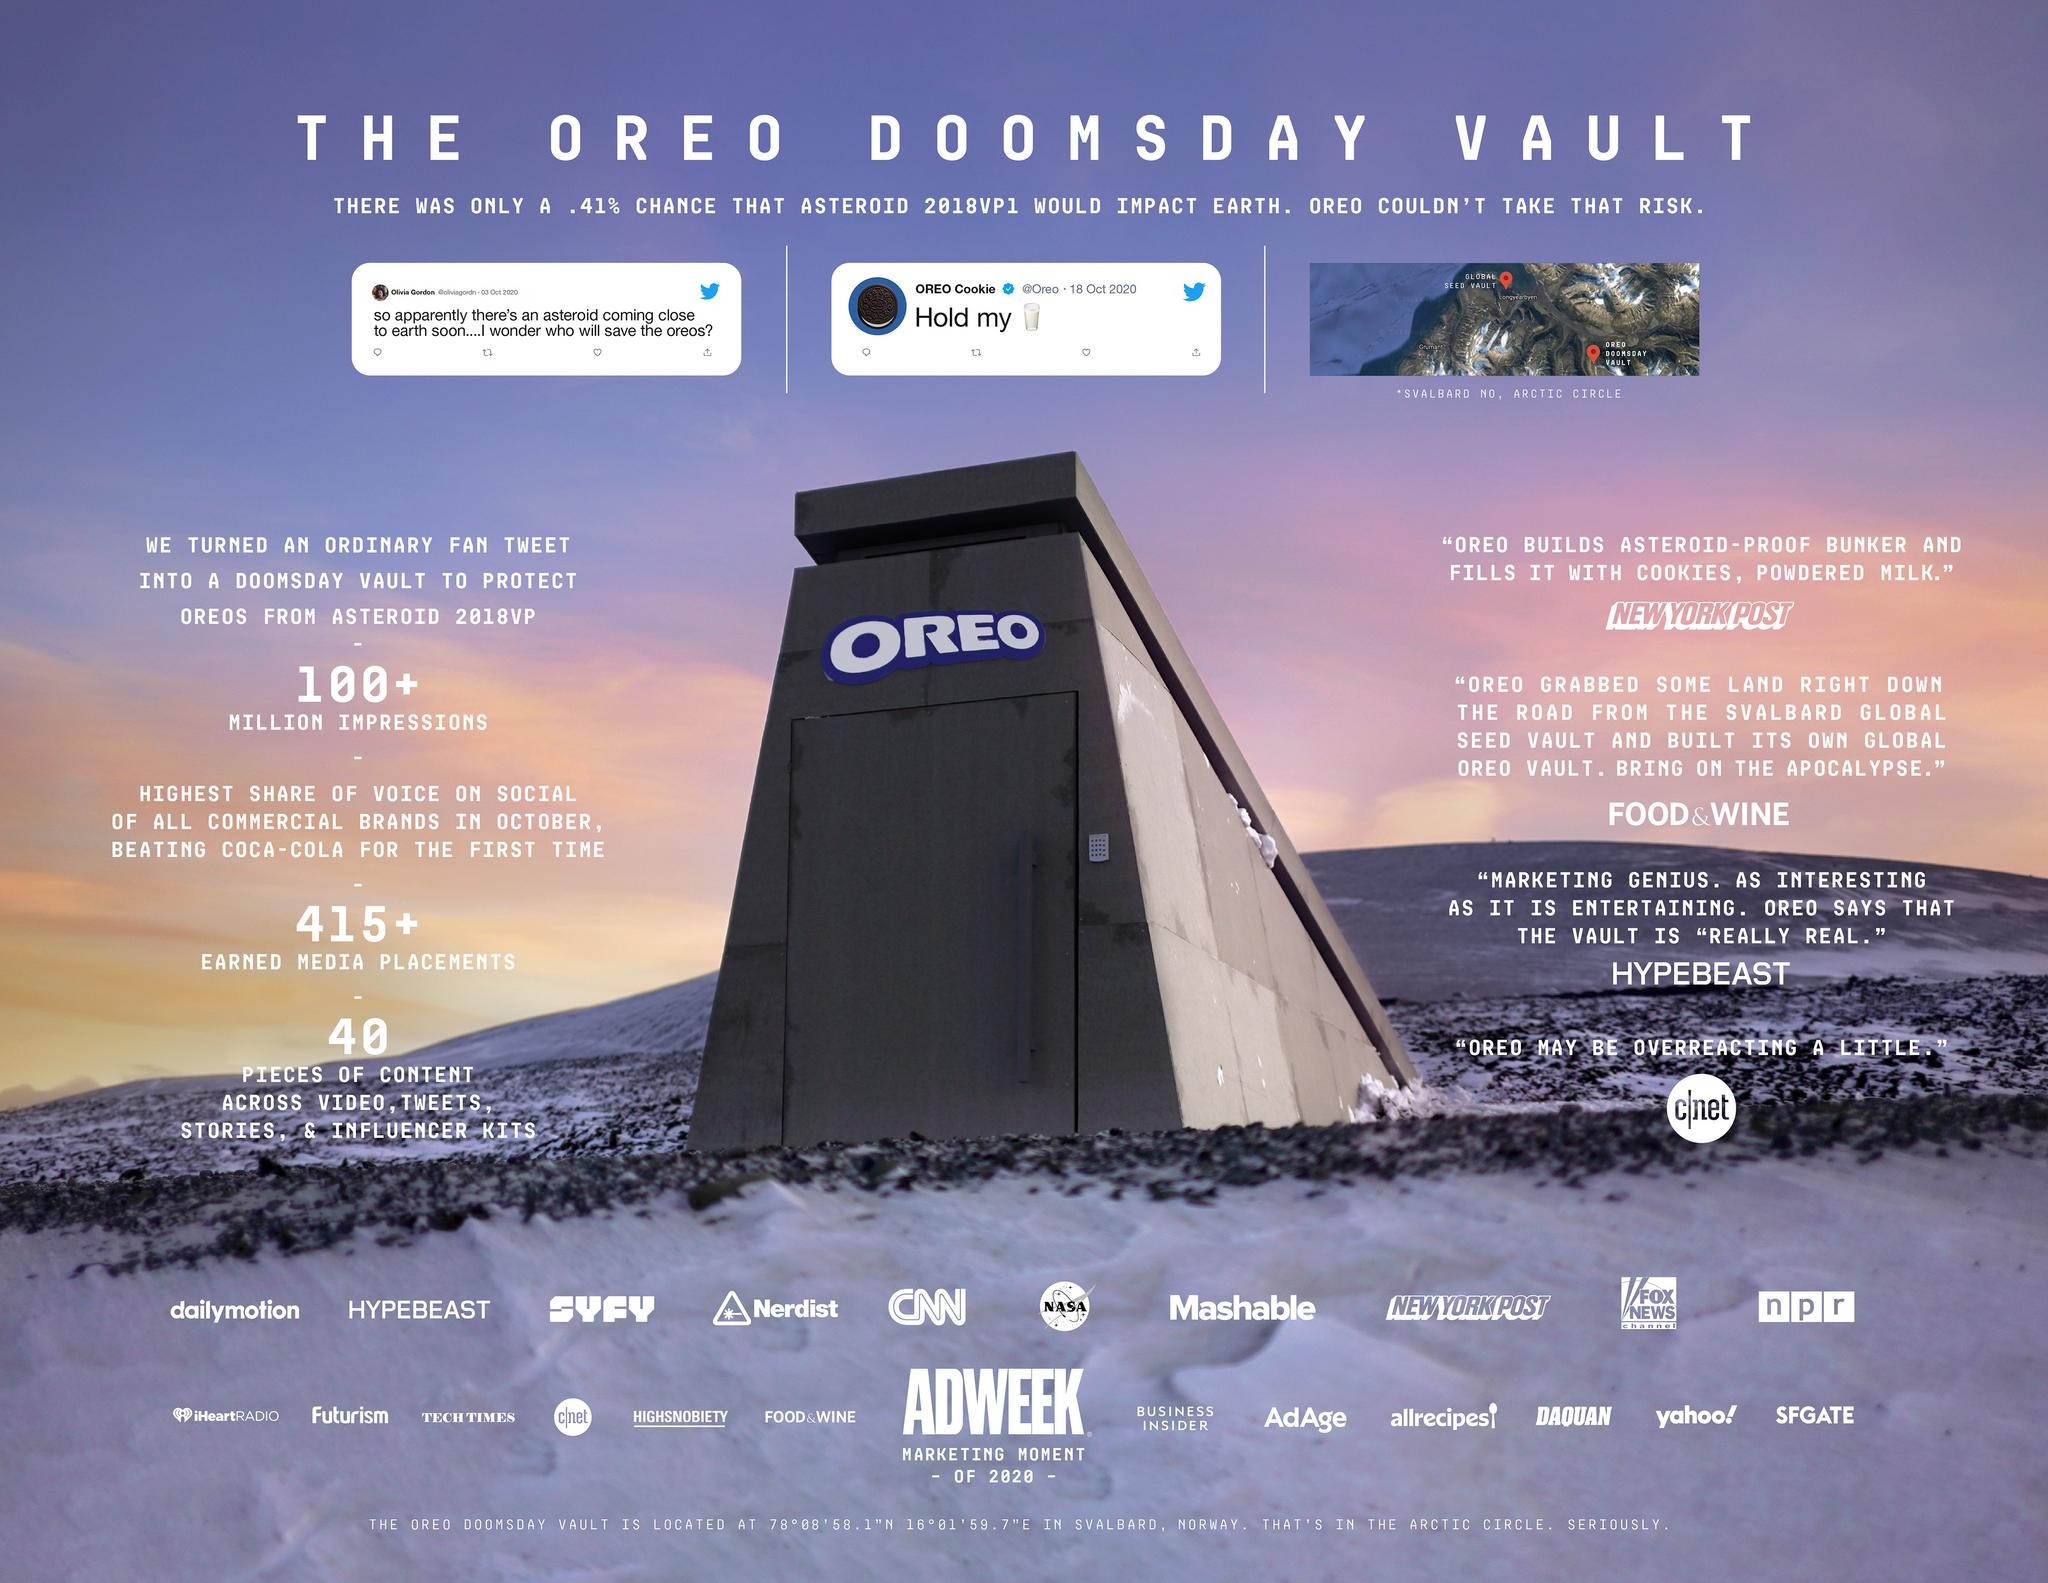 THE OREO DOOMSDAY VAULT